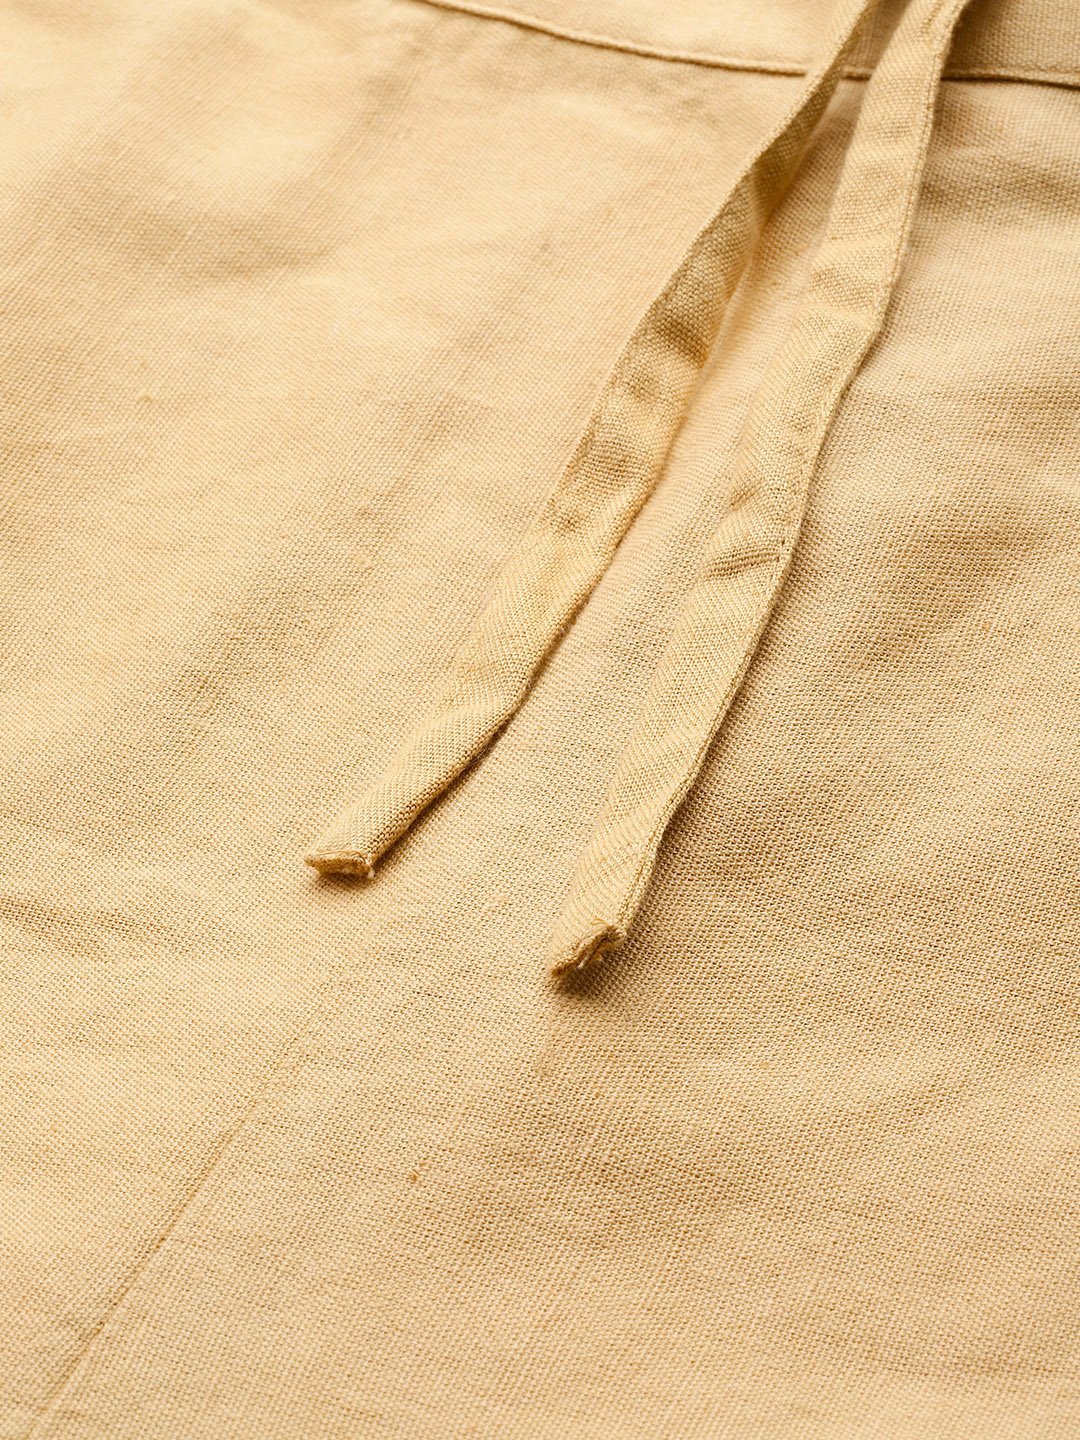 Women's Gold Cotton Solid Straight Pants - Juniper